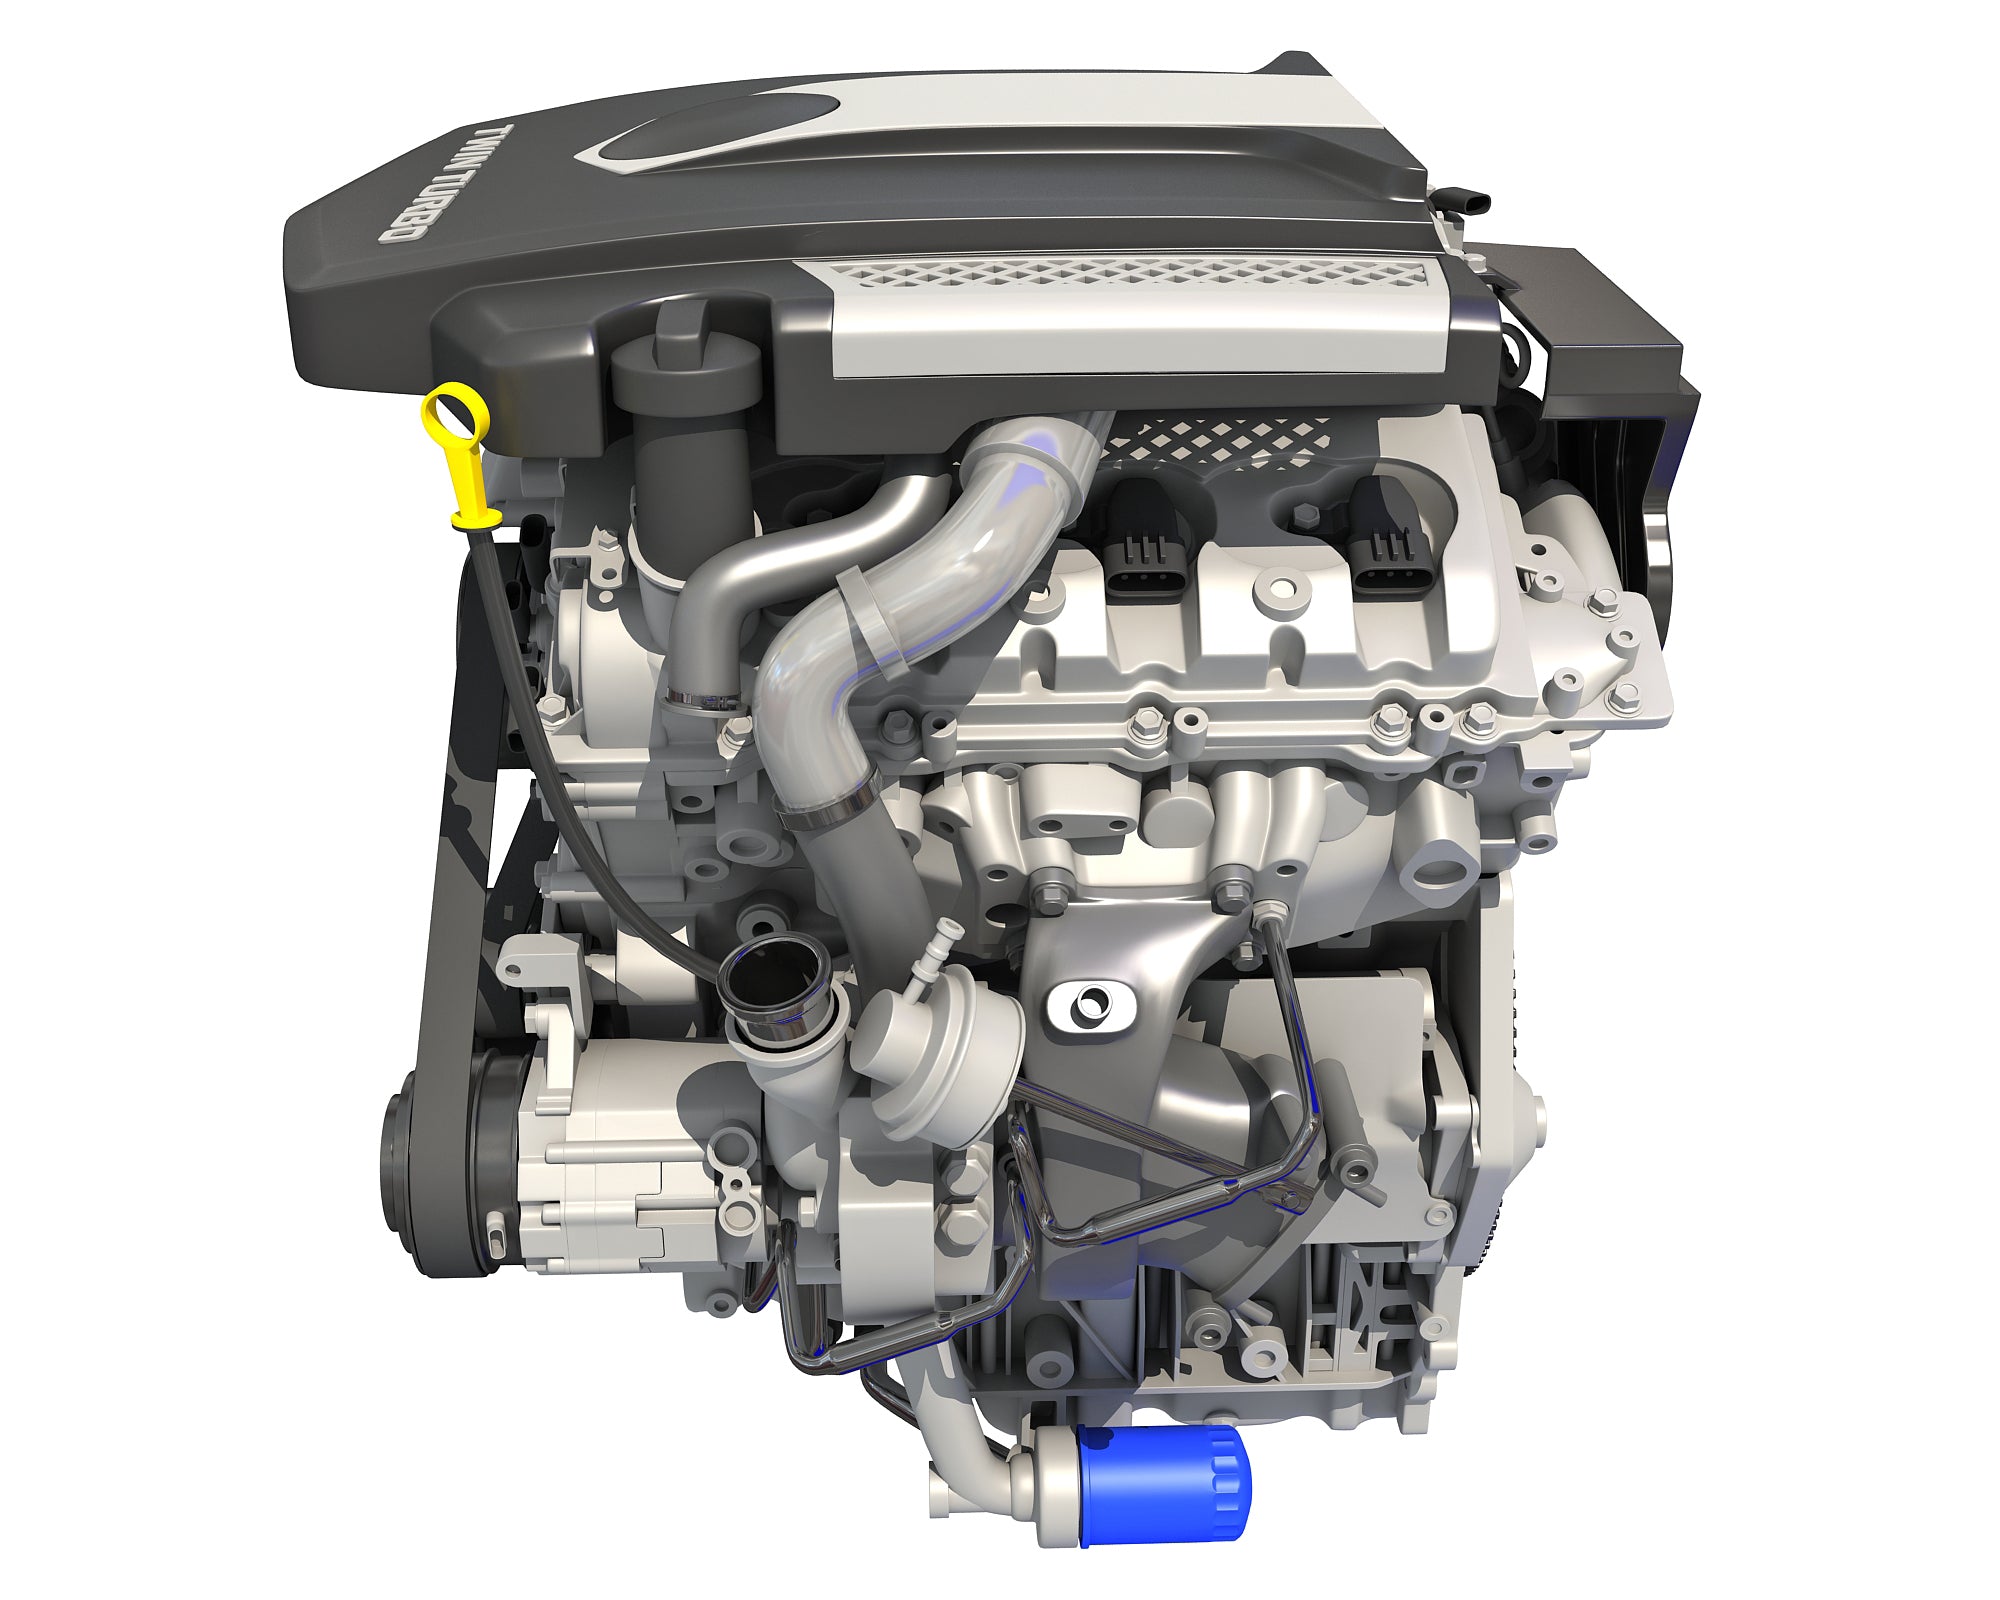 CadillacV6 Engine